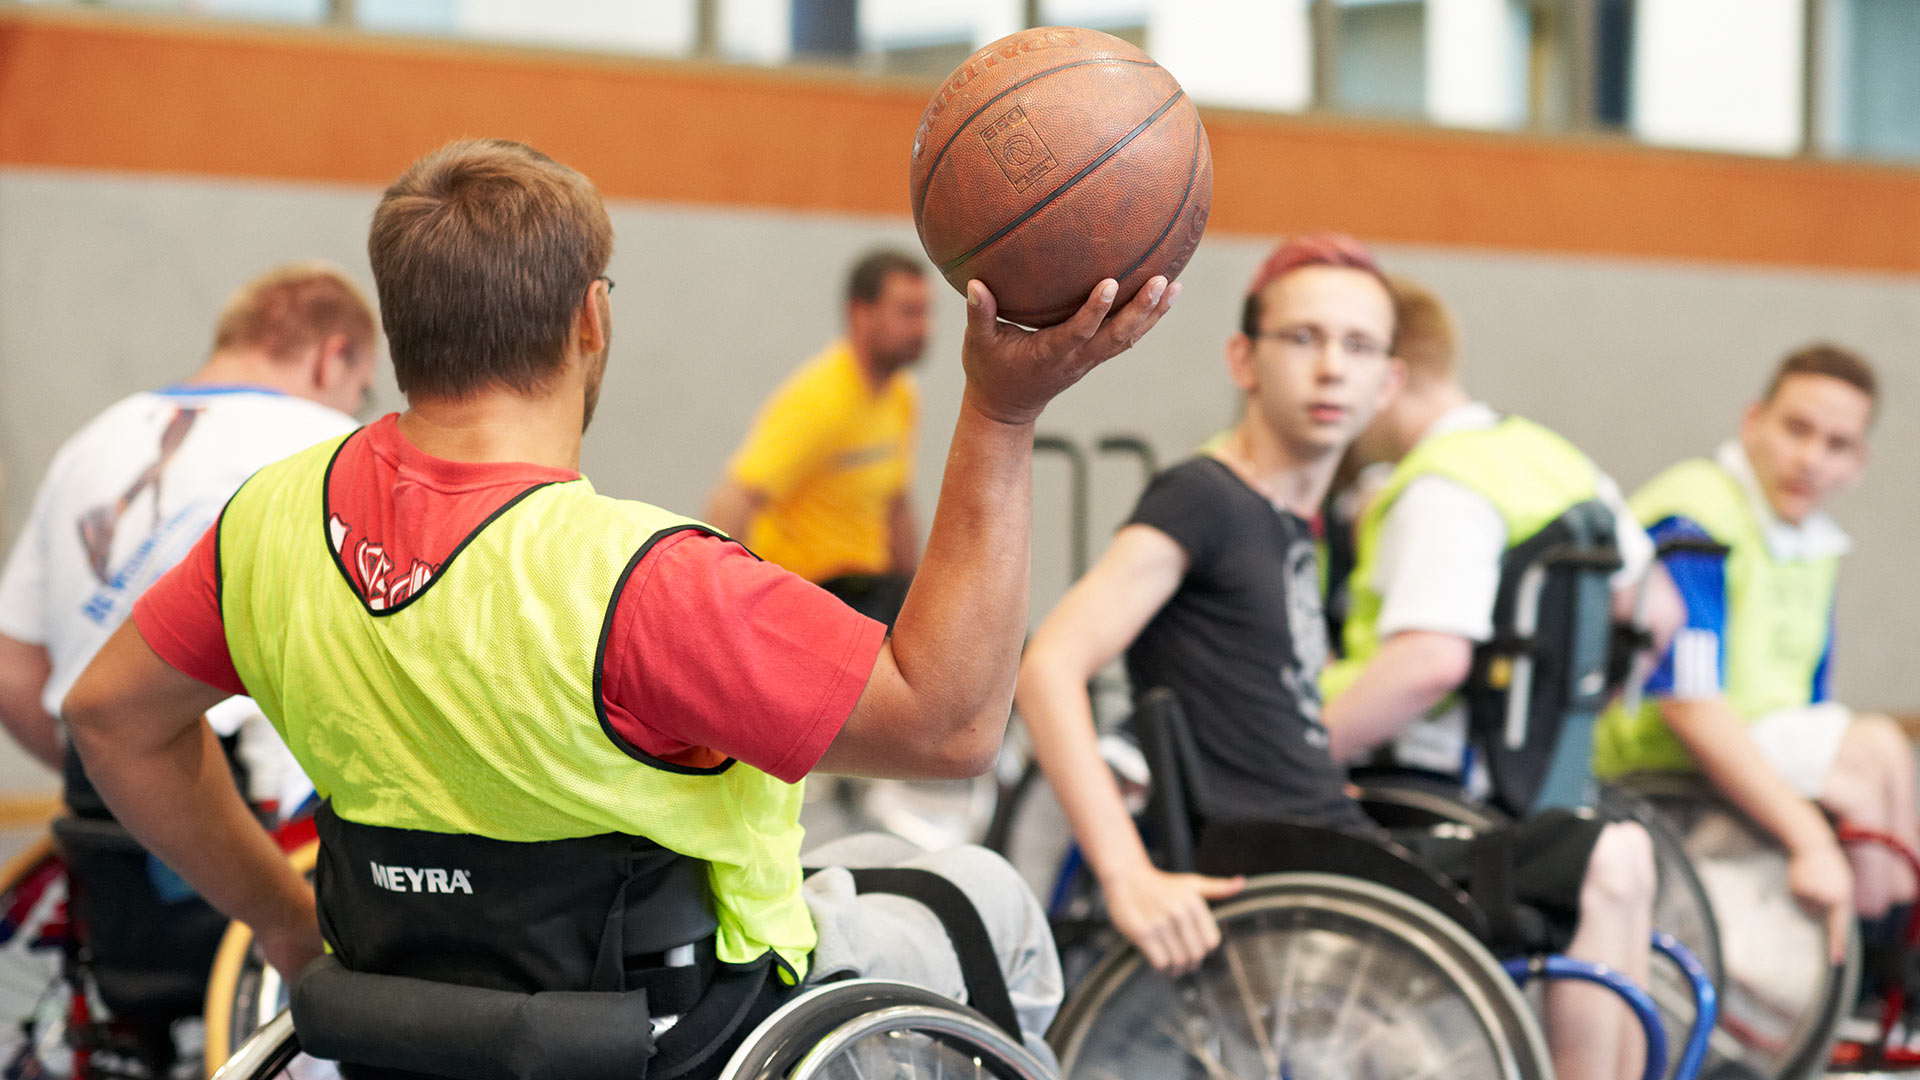 Beim Rollstuhl-Basketball geht es rasant zu, so dass der Fotograf kaum hinterherkommt.